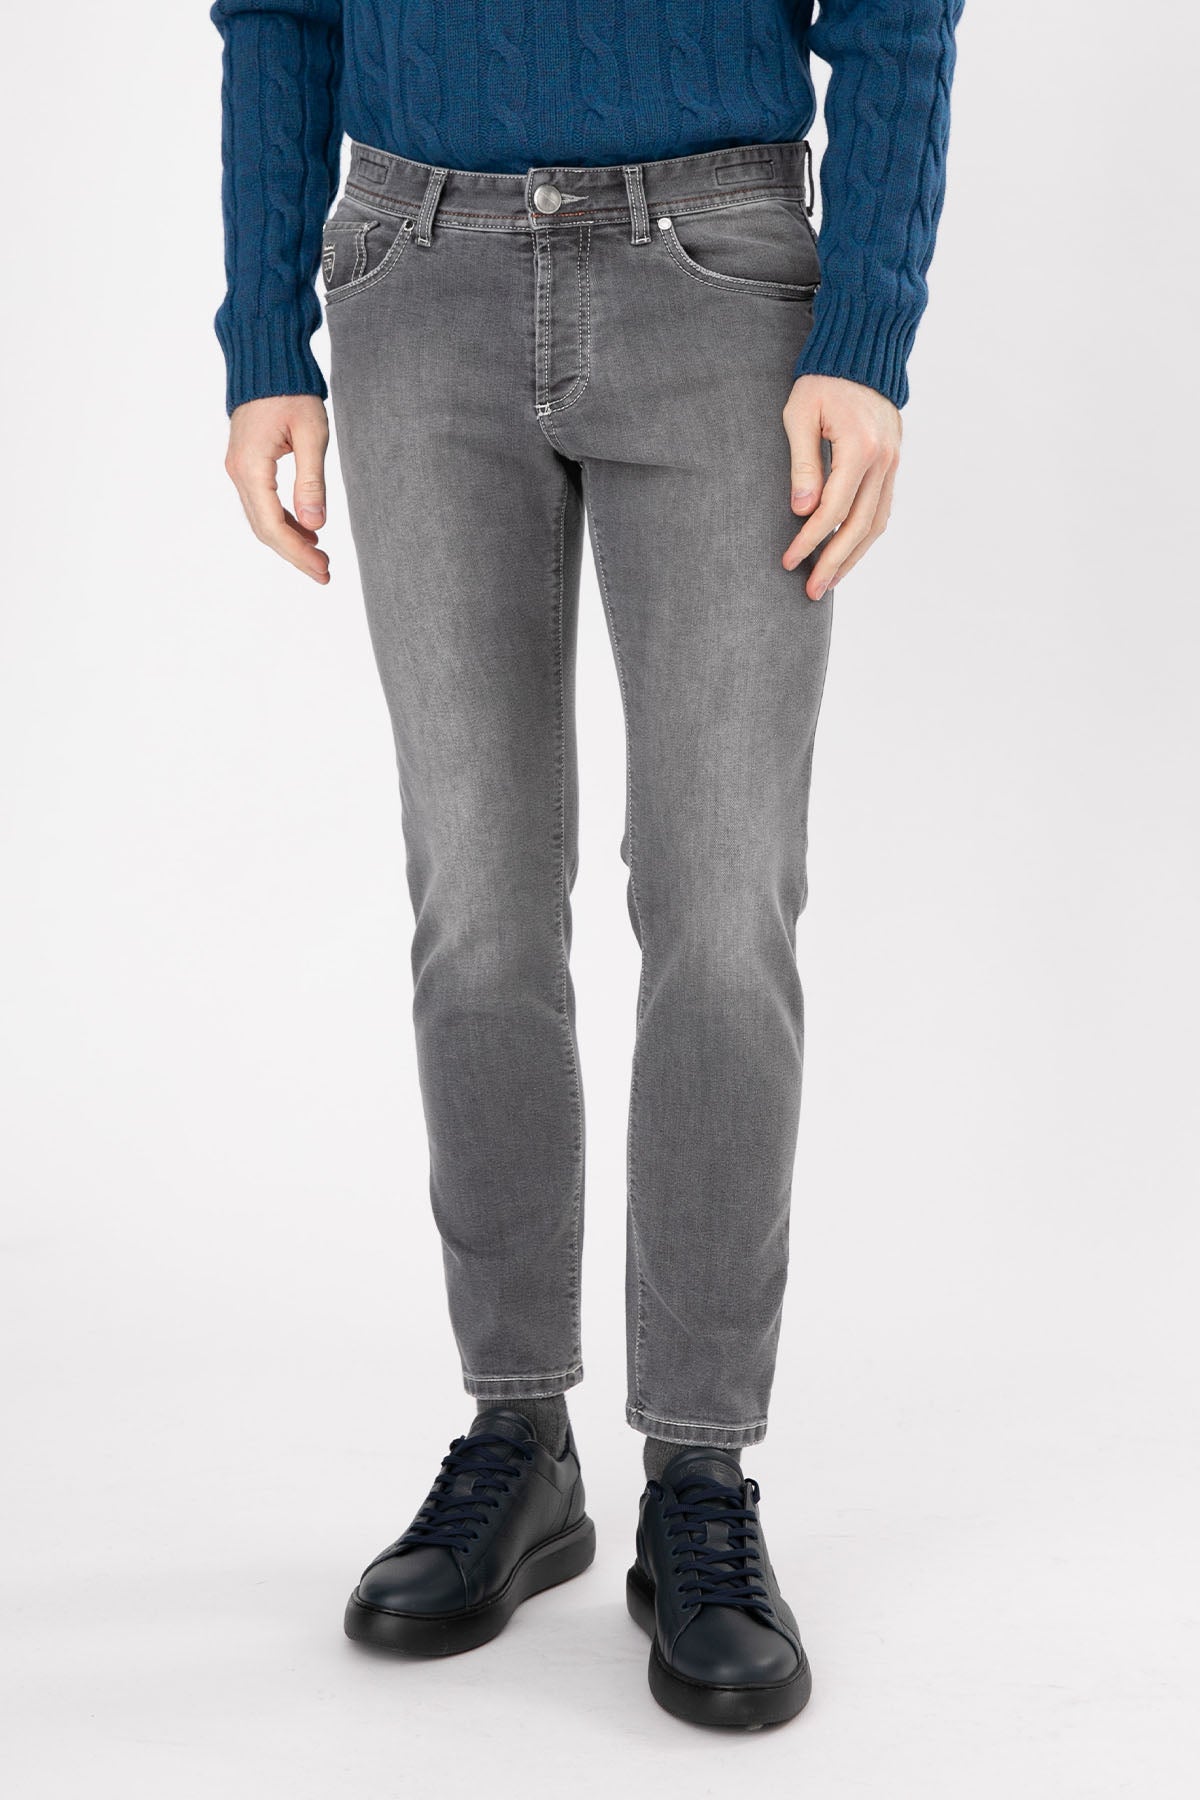 Richard J. Brown Cortina Slim Fit Jeans-Libas Trendy Fashion Store